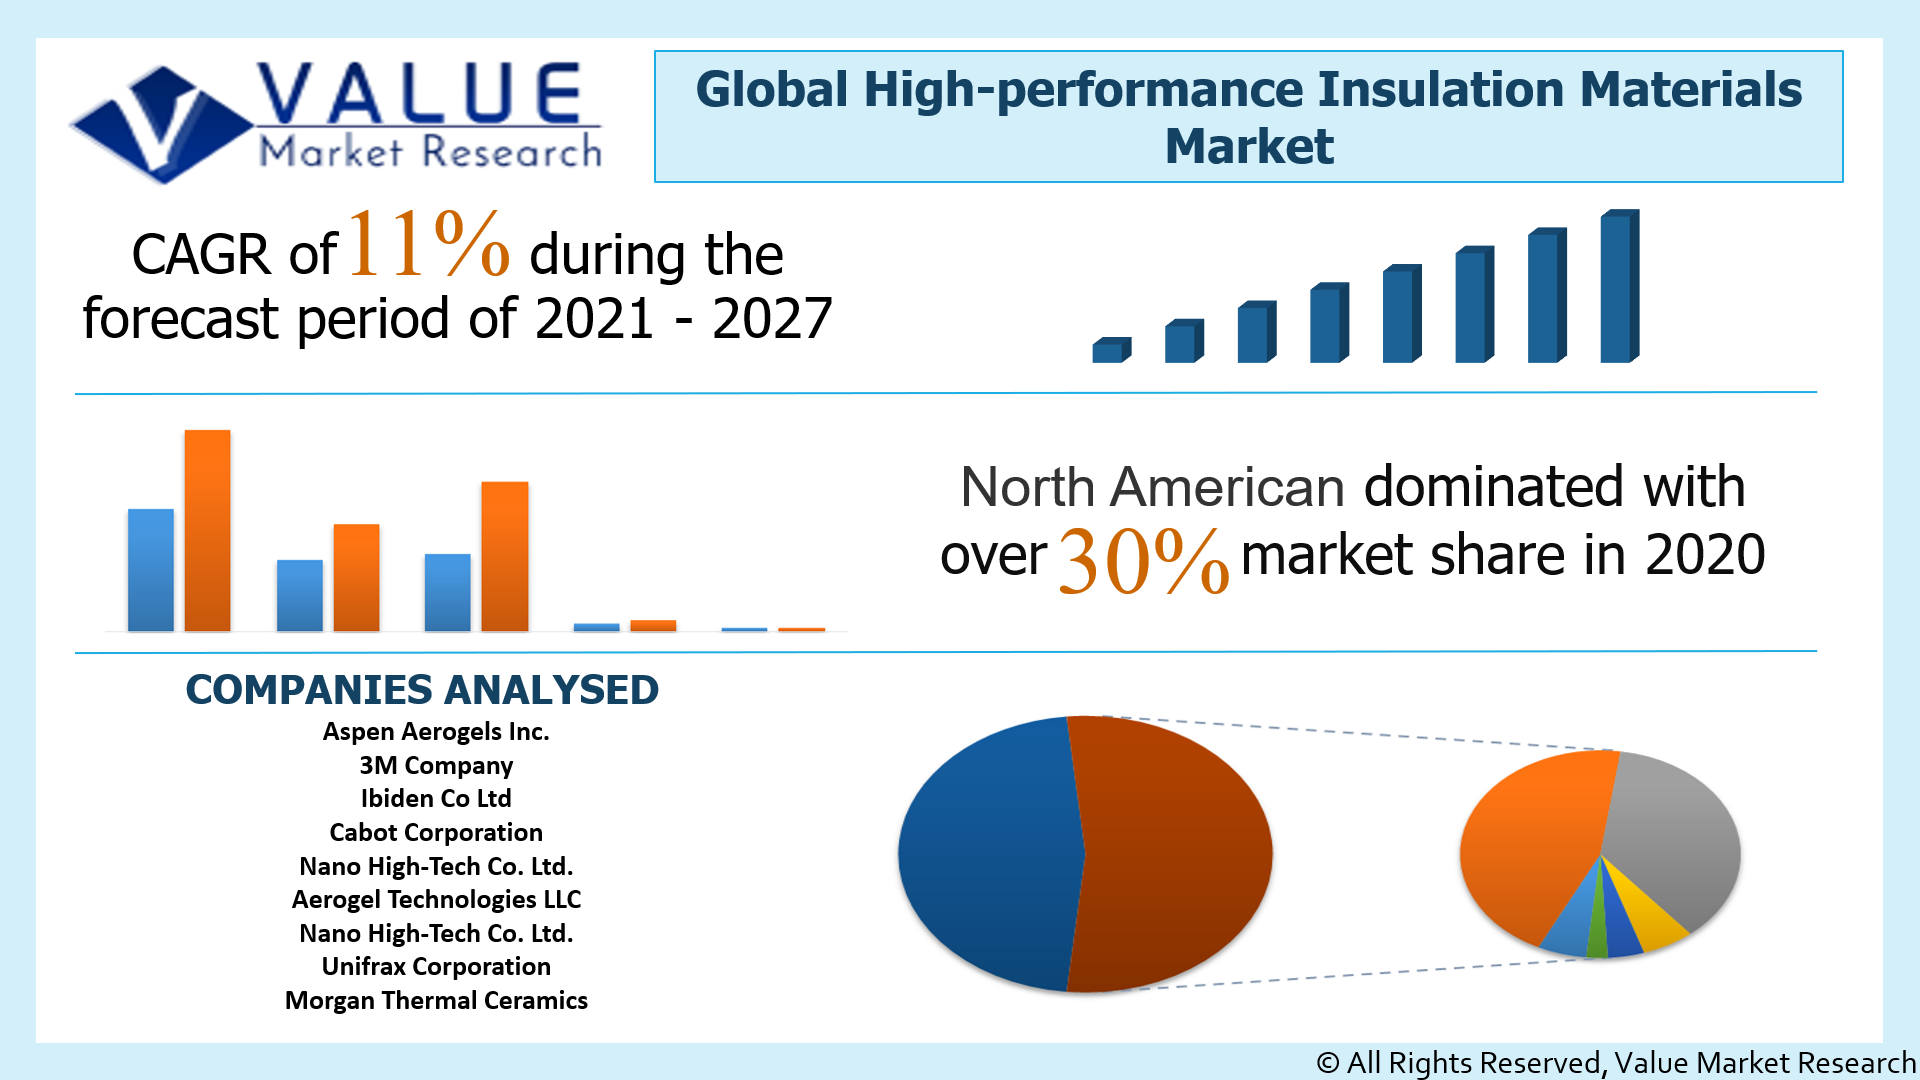 Global High-performance Insulation Materials Market Share